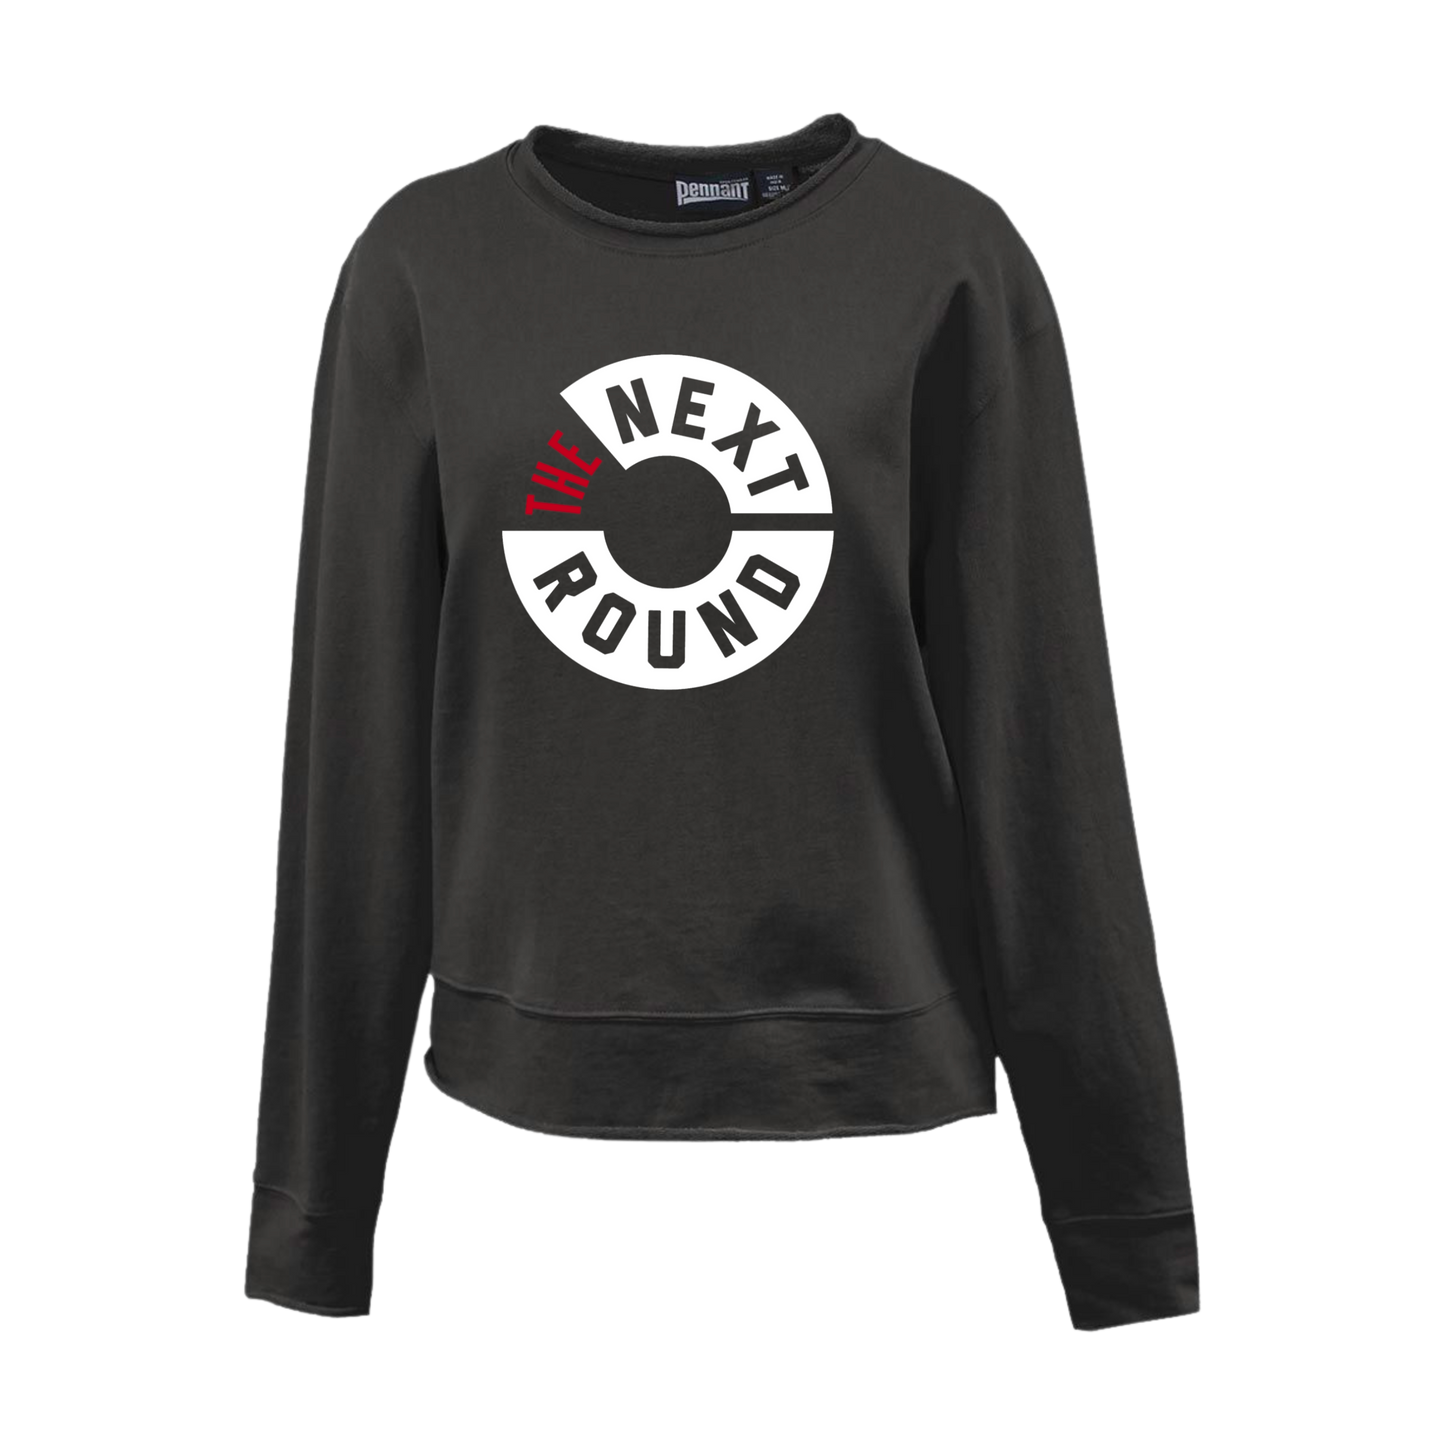 TNR Roll Edge Crewneck Sweatshirt (Black)